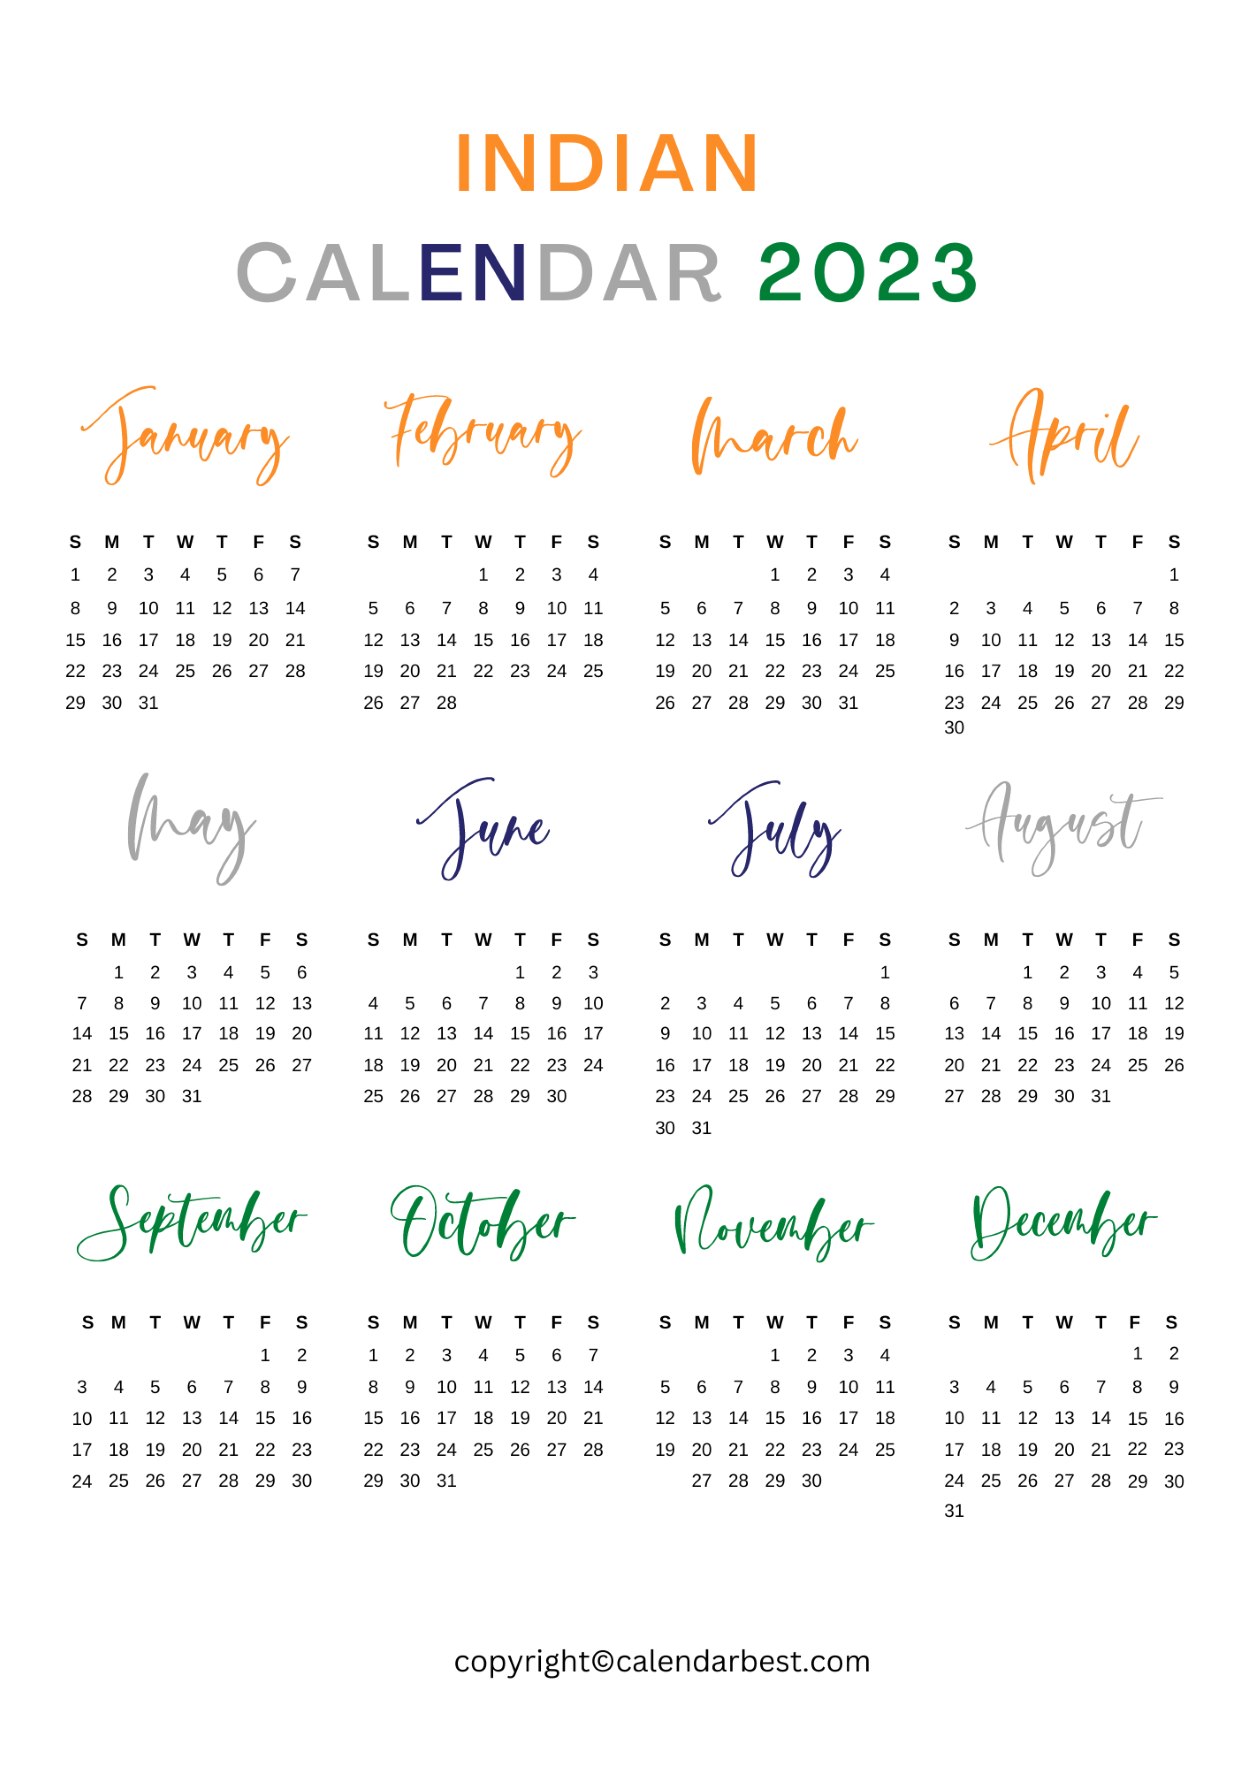 Indian Calendar 2023